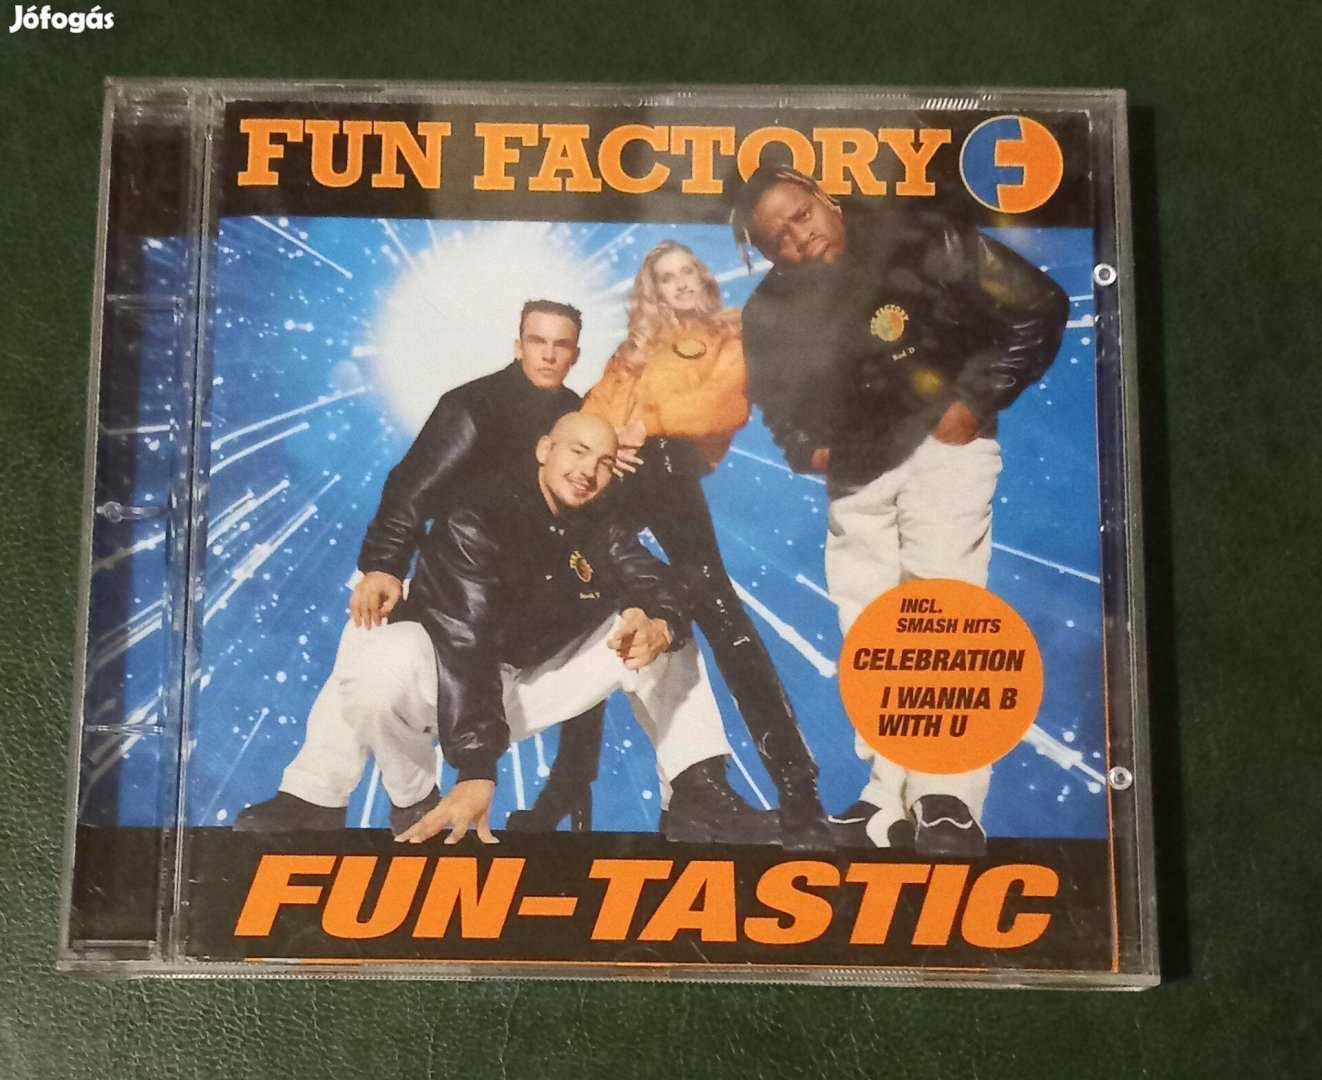 Fun Factory-Fun-tastic ( CD album )